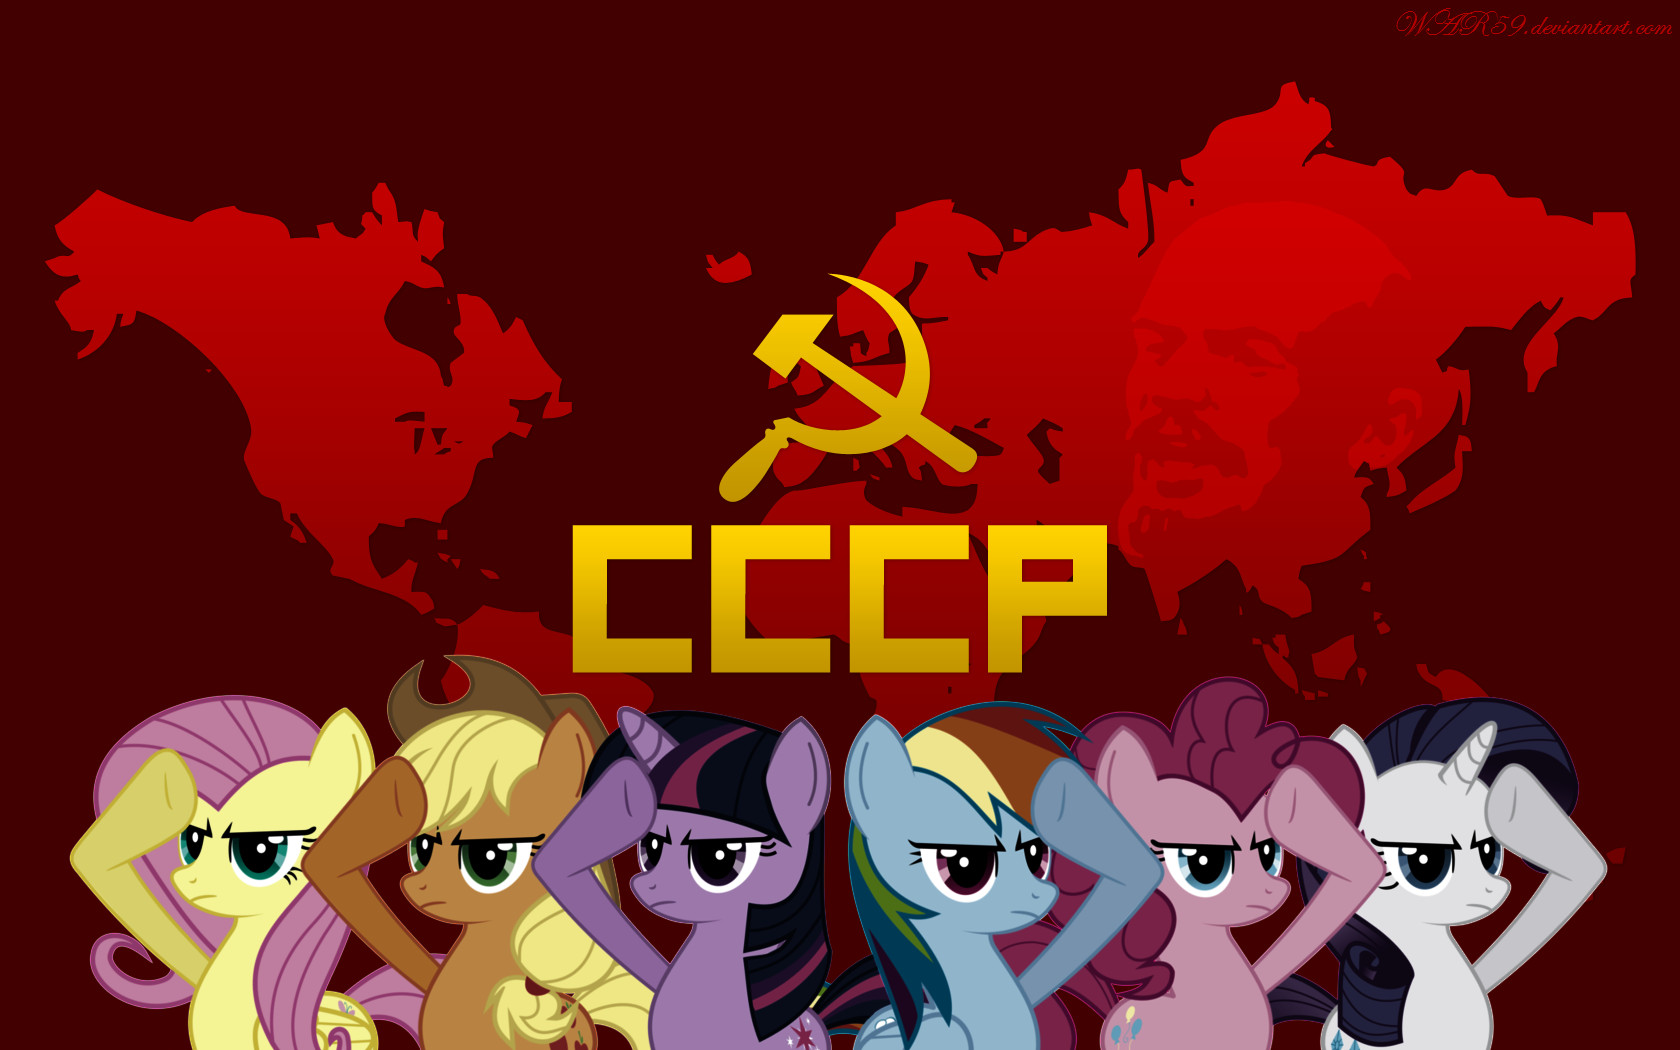 soviet_ponies_by_war59-d5ewfl4.jpg